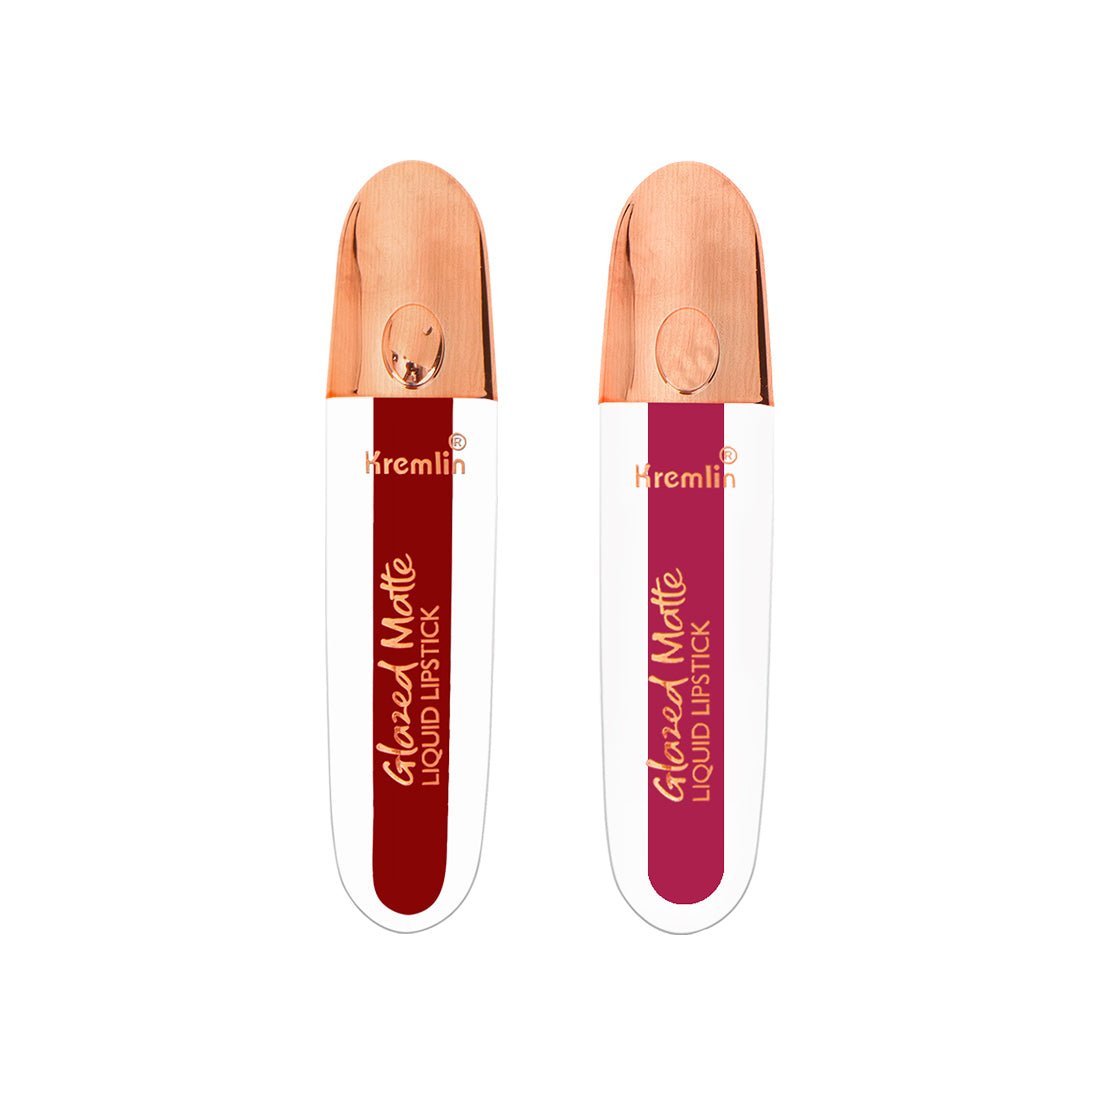 Kremlin Glazed Matte Liquid Lipstick Lips Pack of 2 (Fiery Queen,Mermaid)